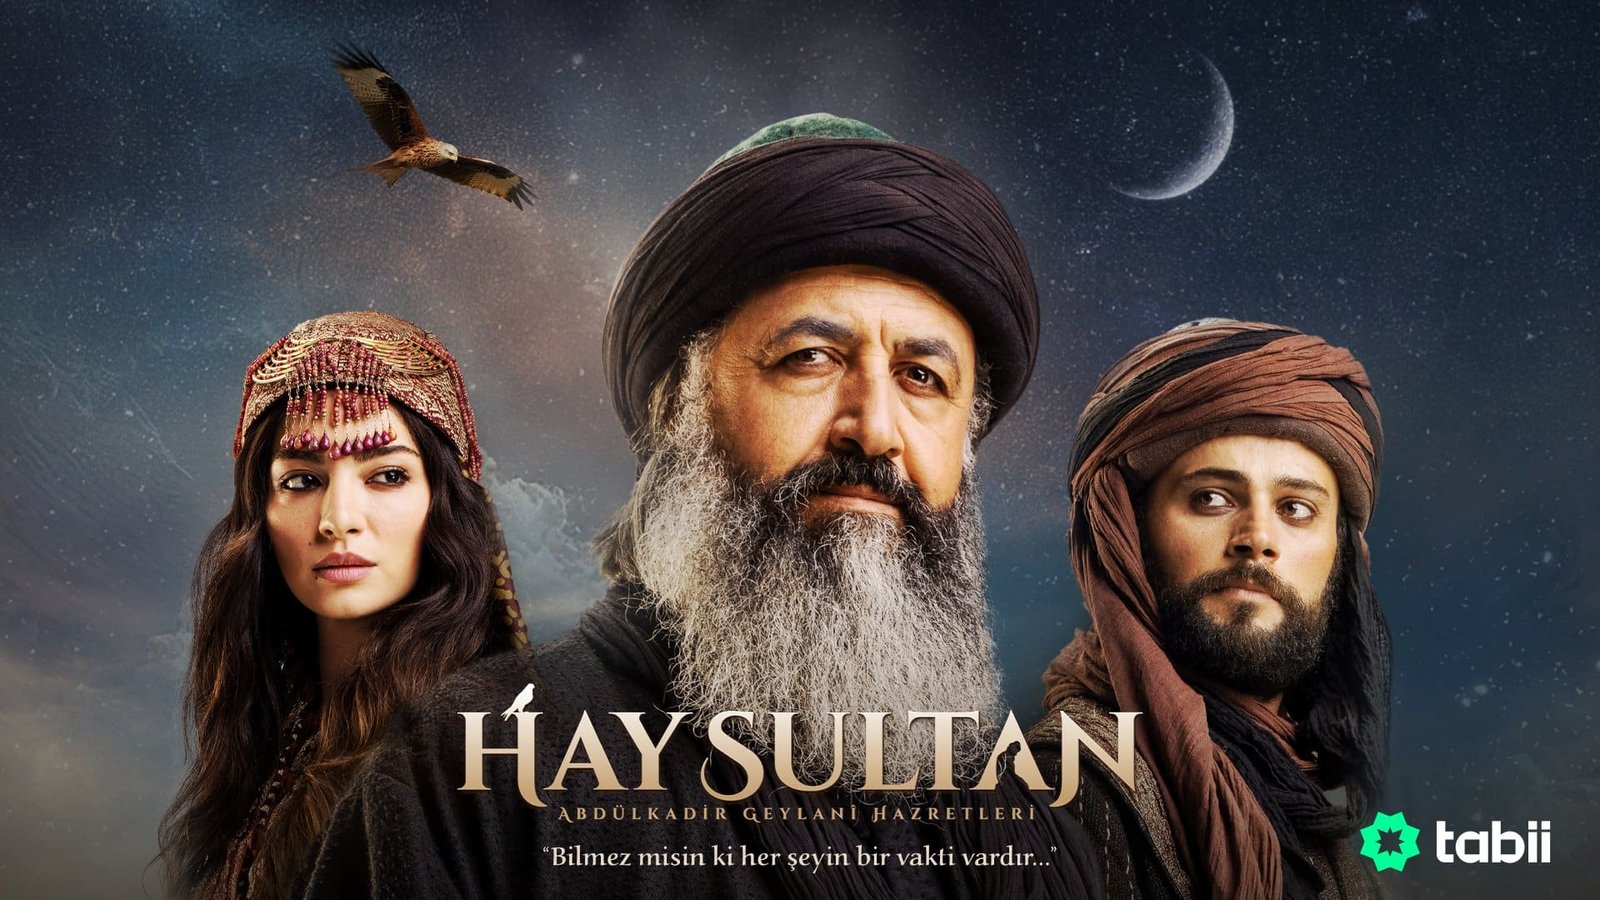 Hay Sultan Abdulkadir Geylani Episode 2 English Subtitles